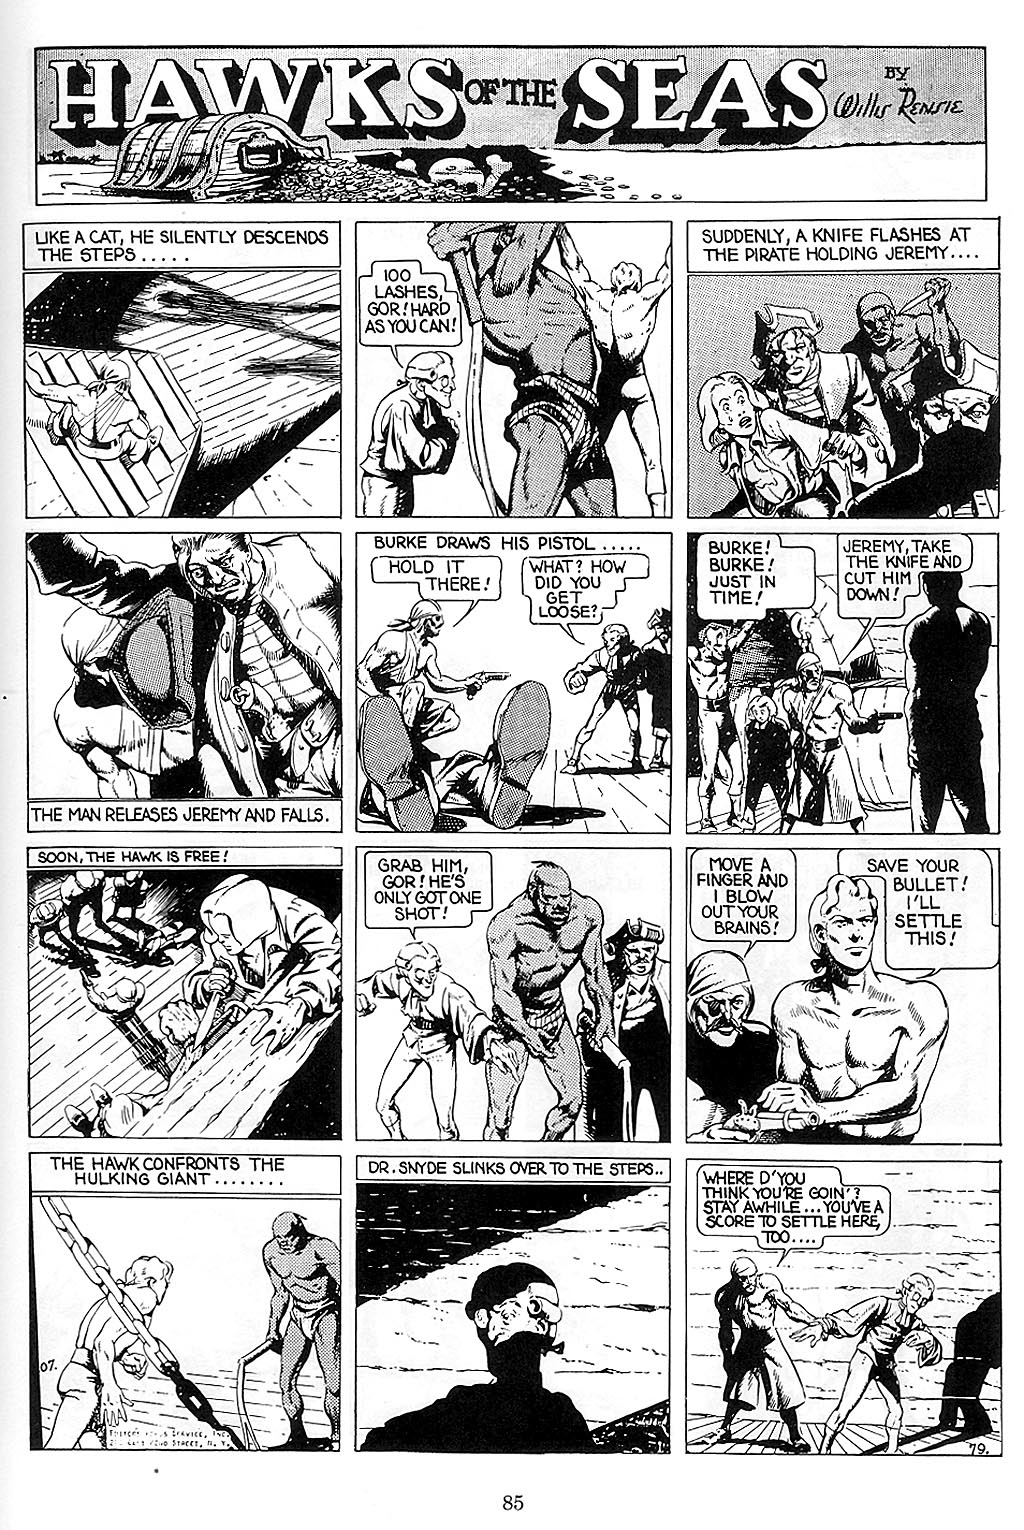 Read online Will Eisner's Hawks of the Seas comic -  Issue # TPB - 86